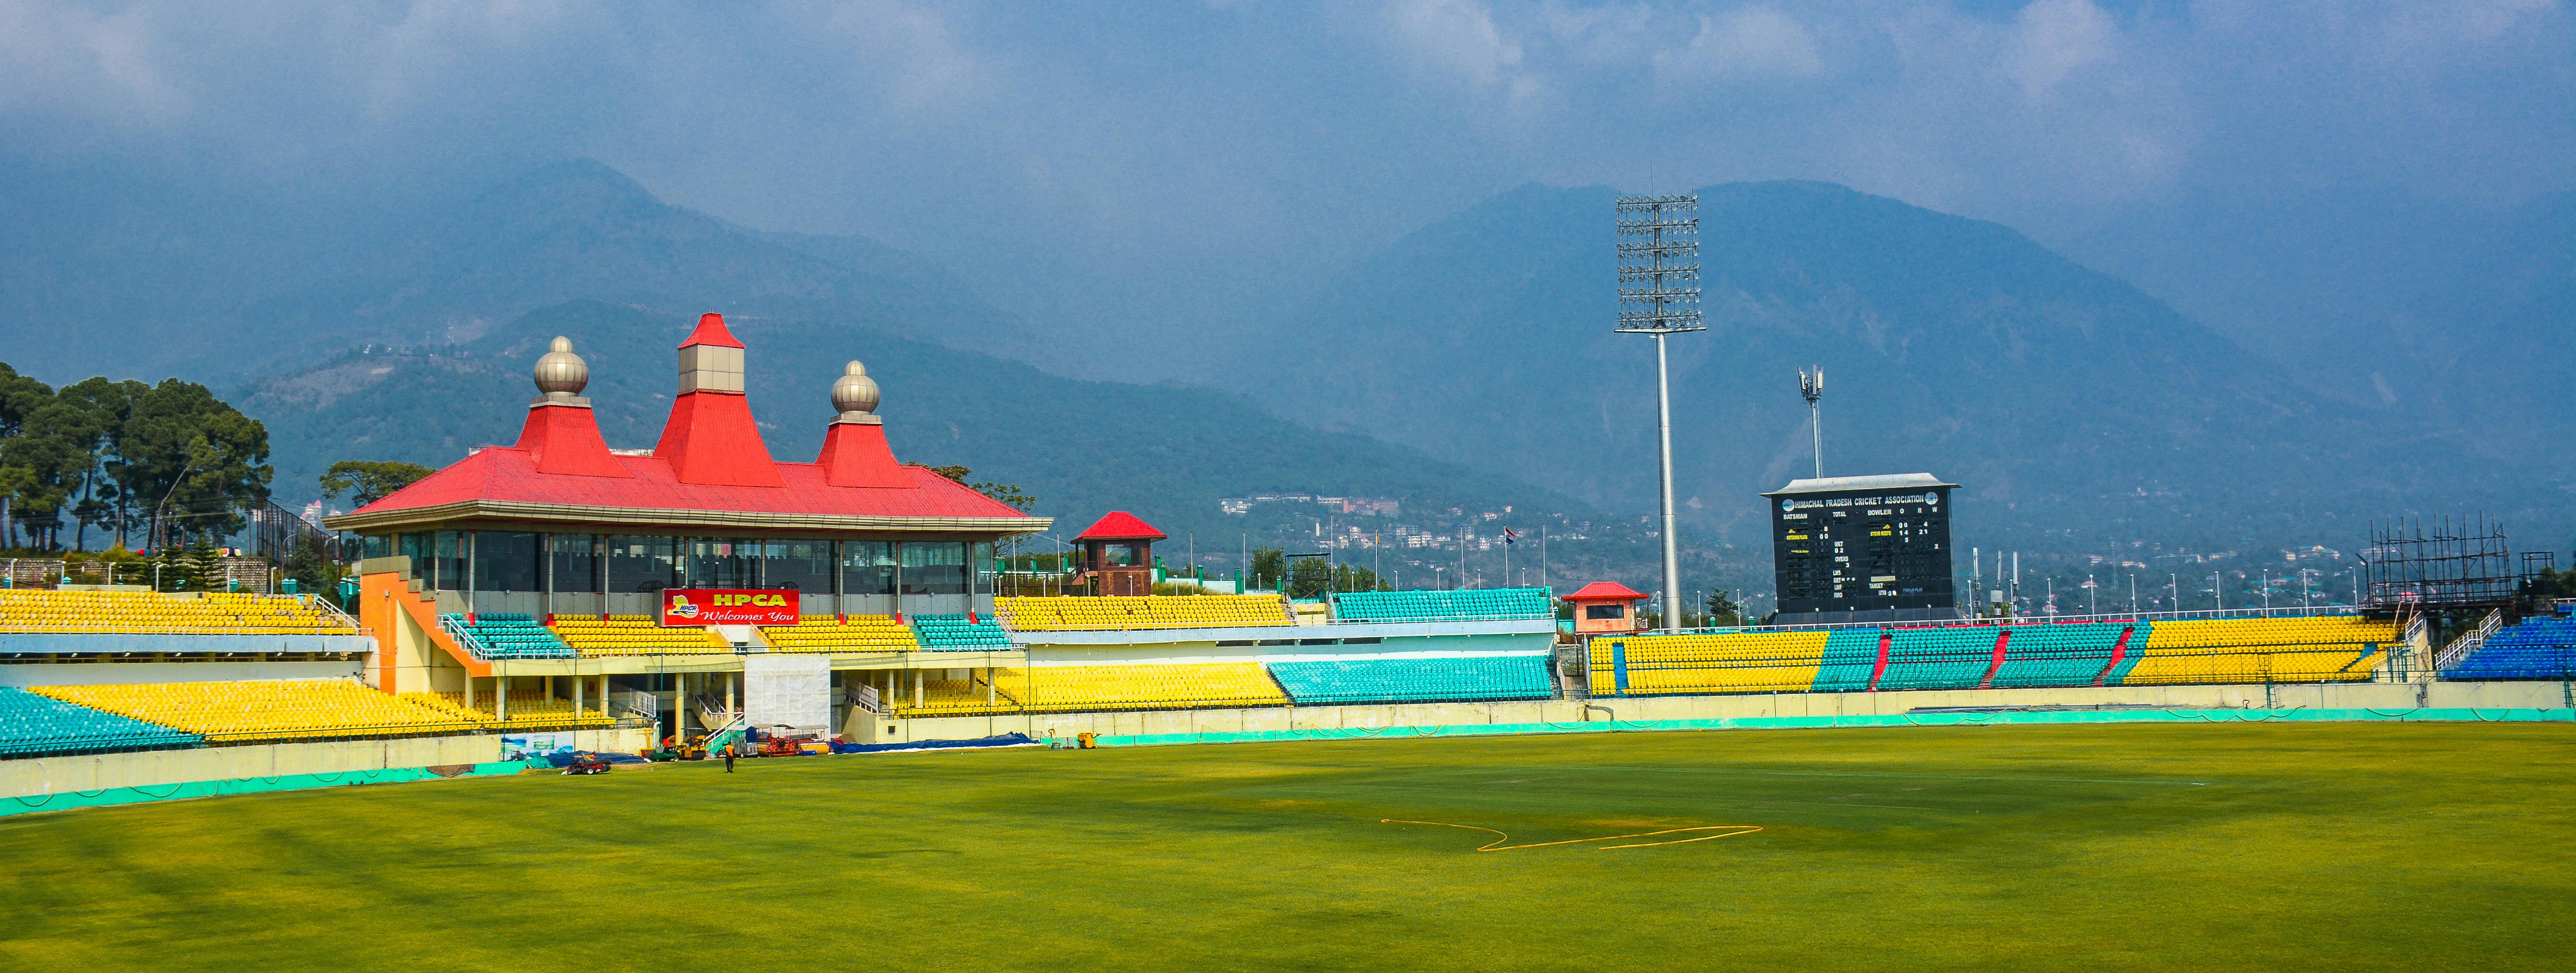 Free stock photo of cricket, stadium